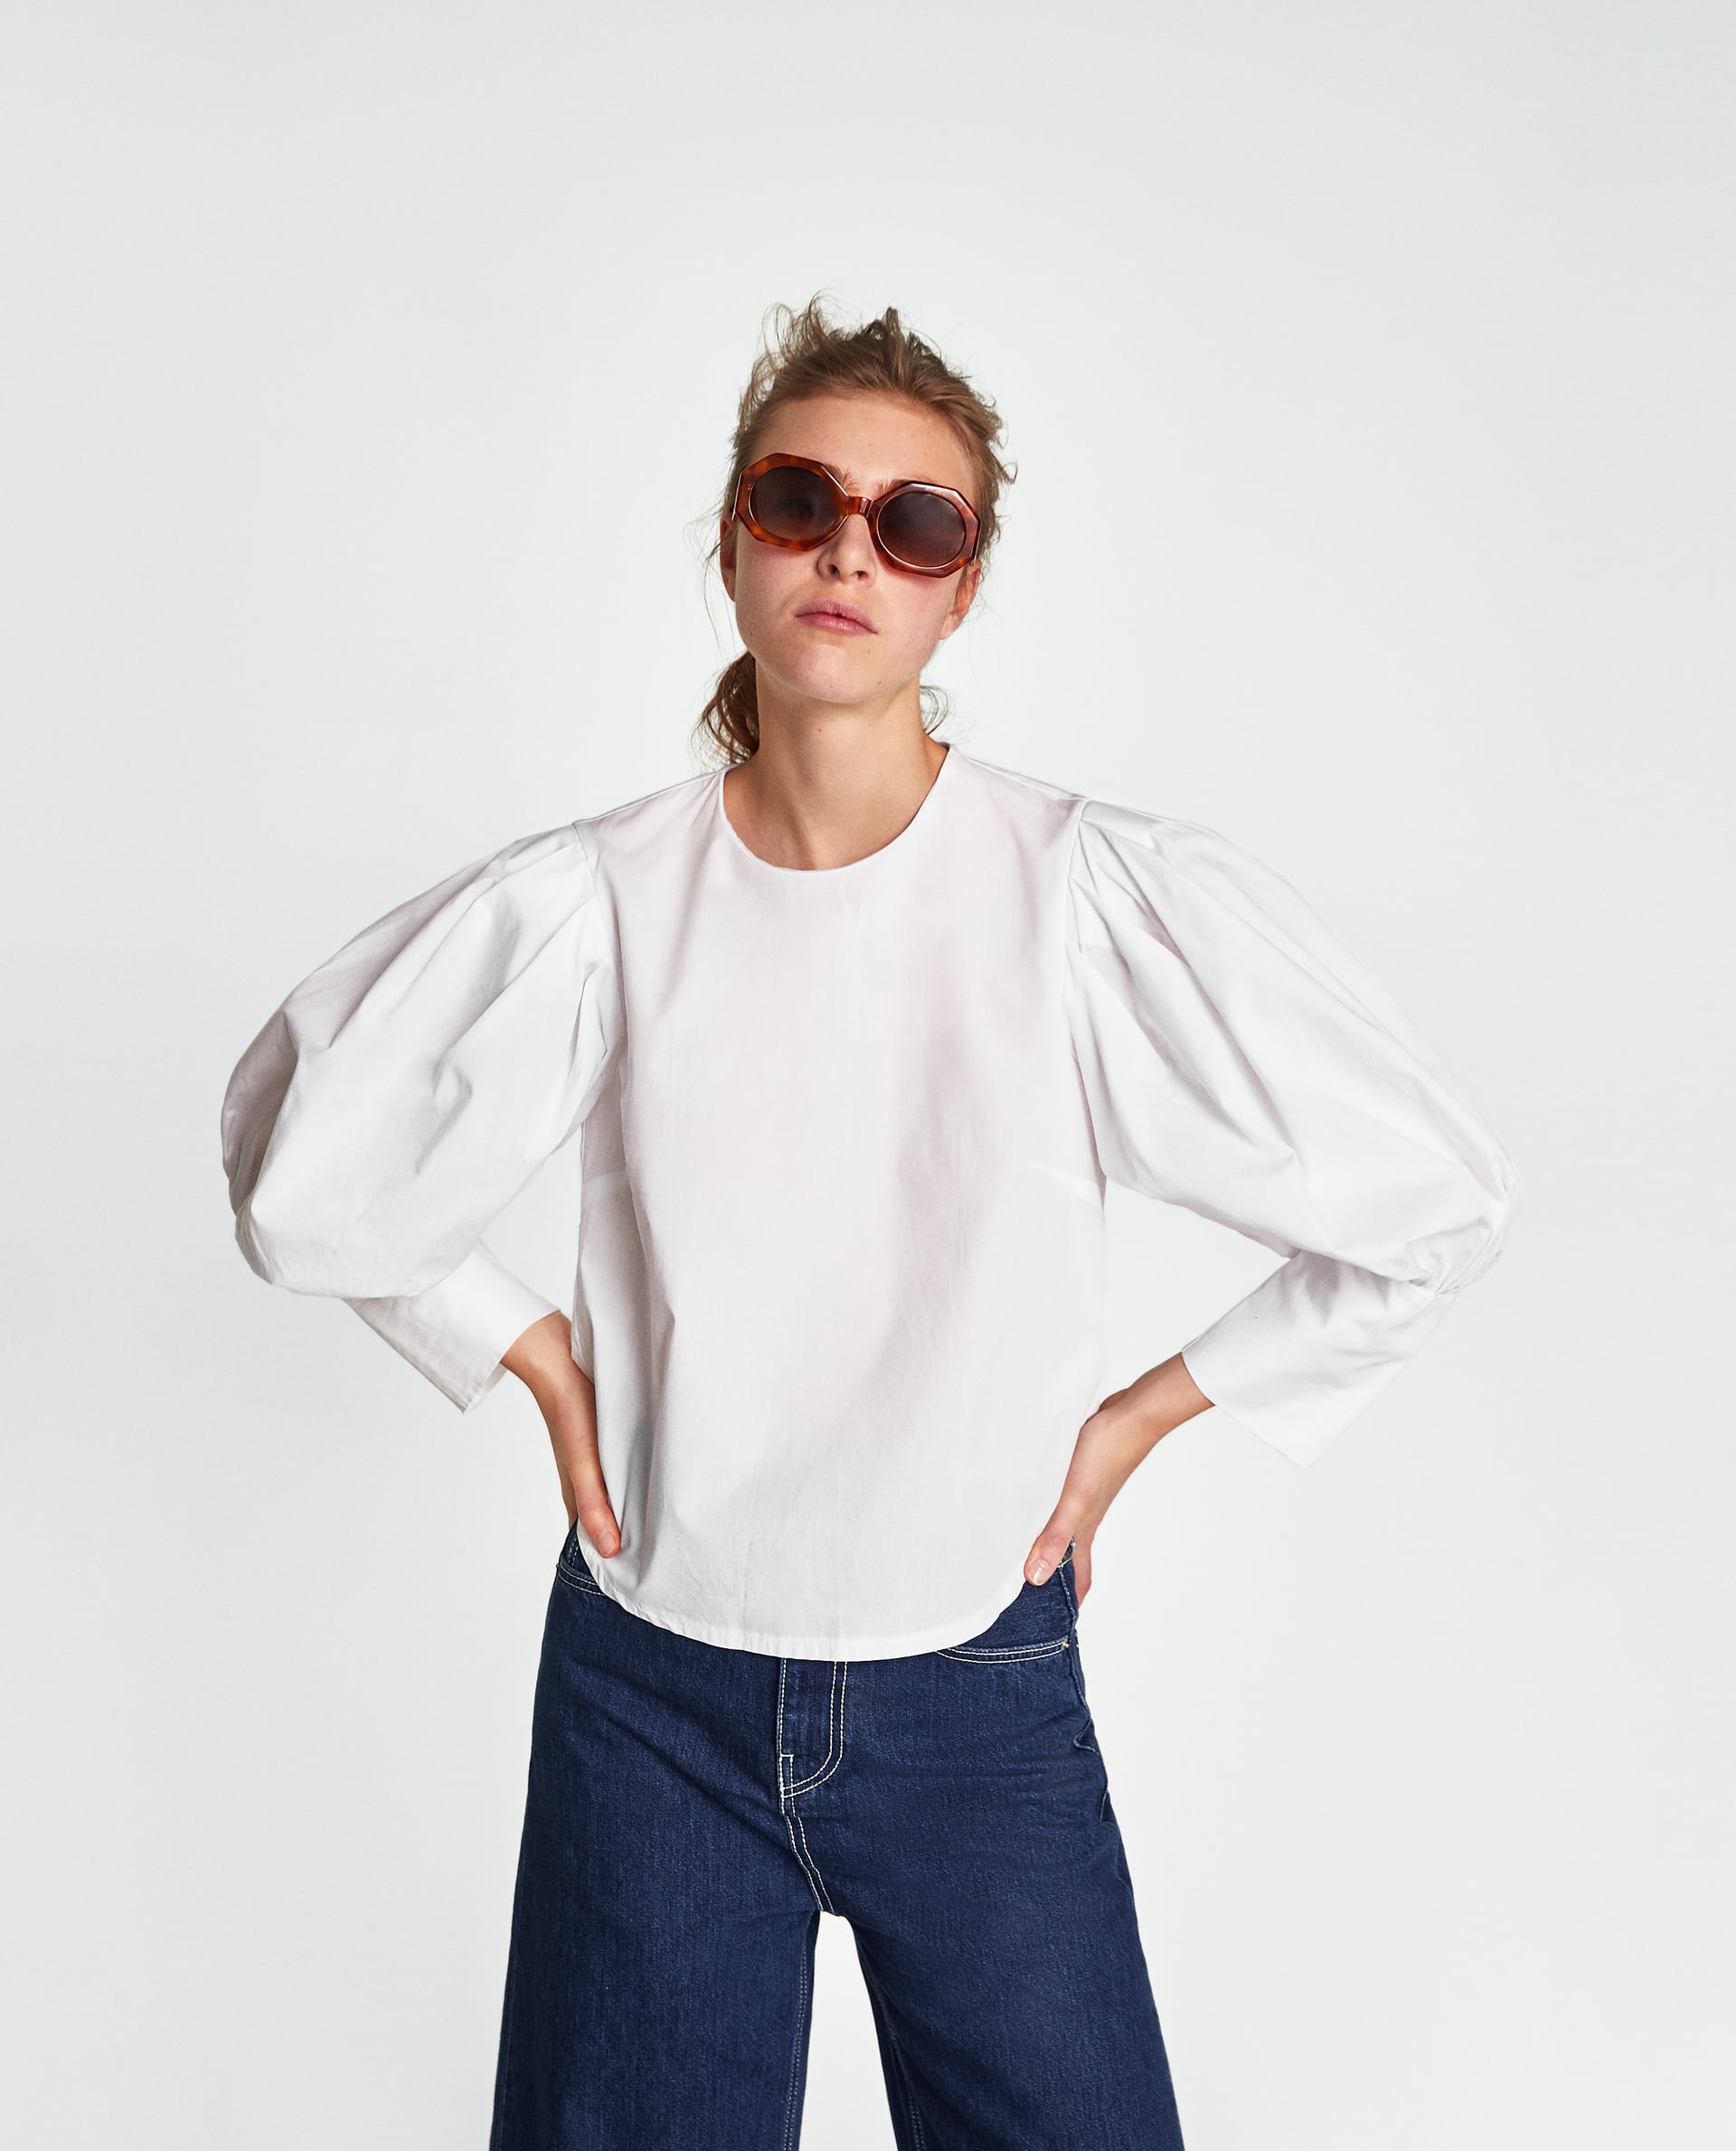 Best Pieces to Buy From Zara Australia Website | Who What Wear